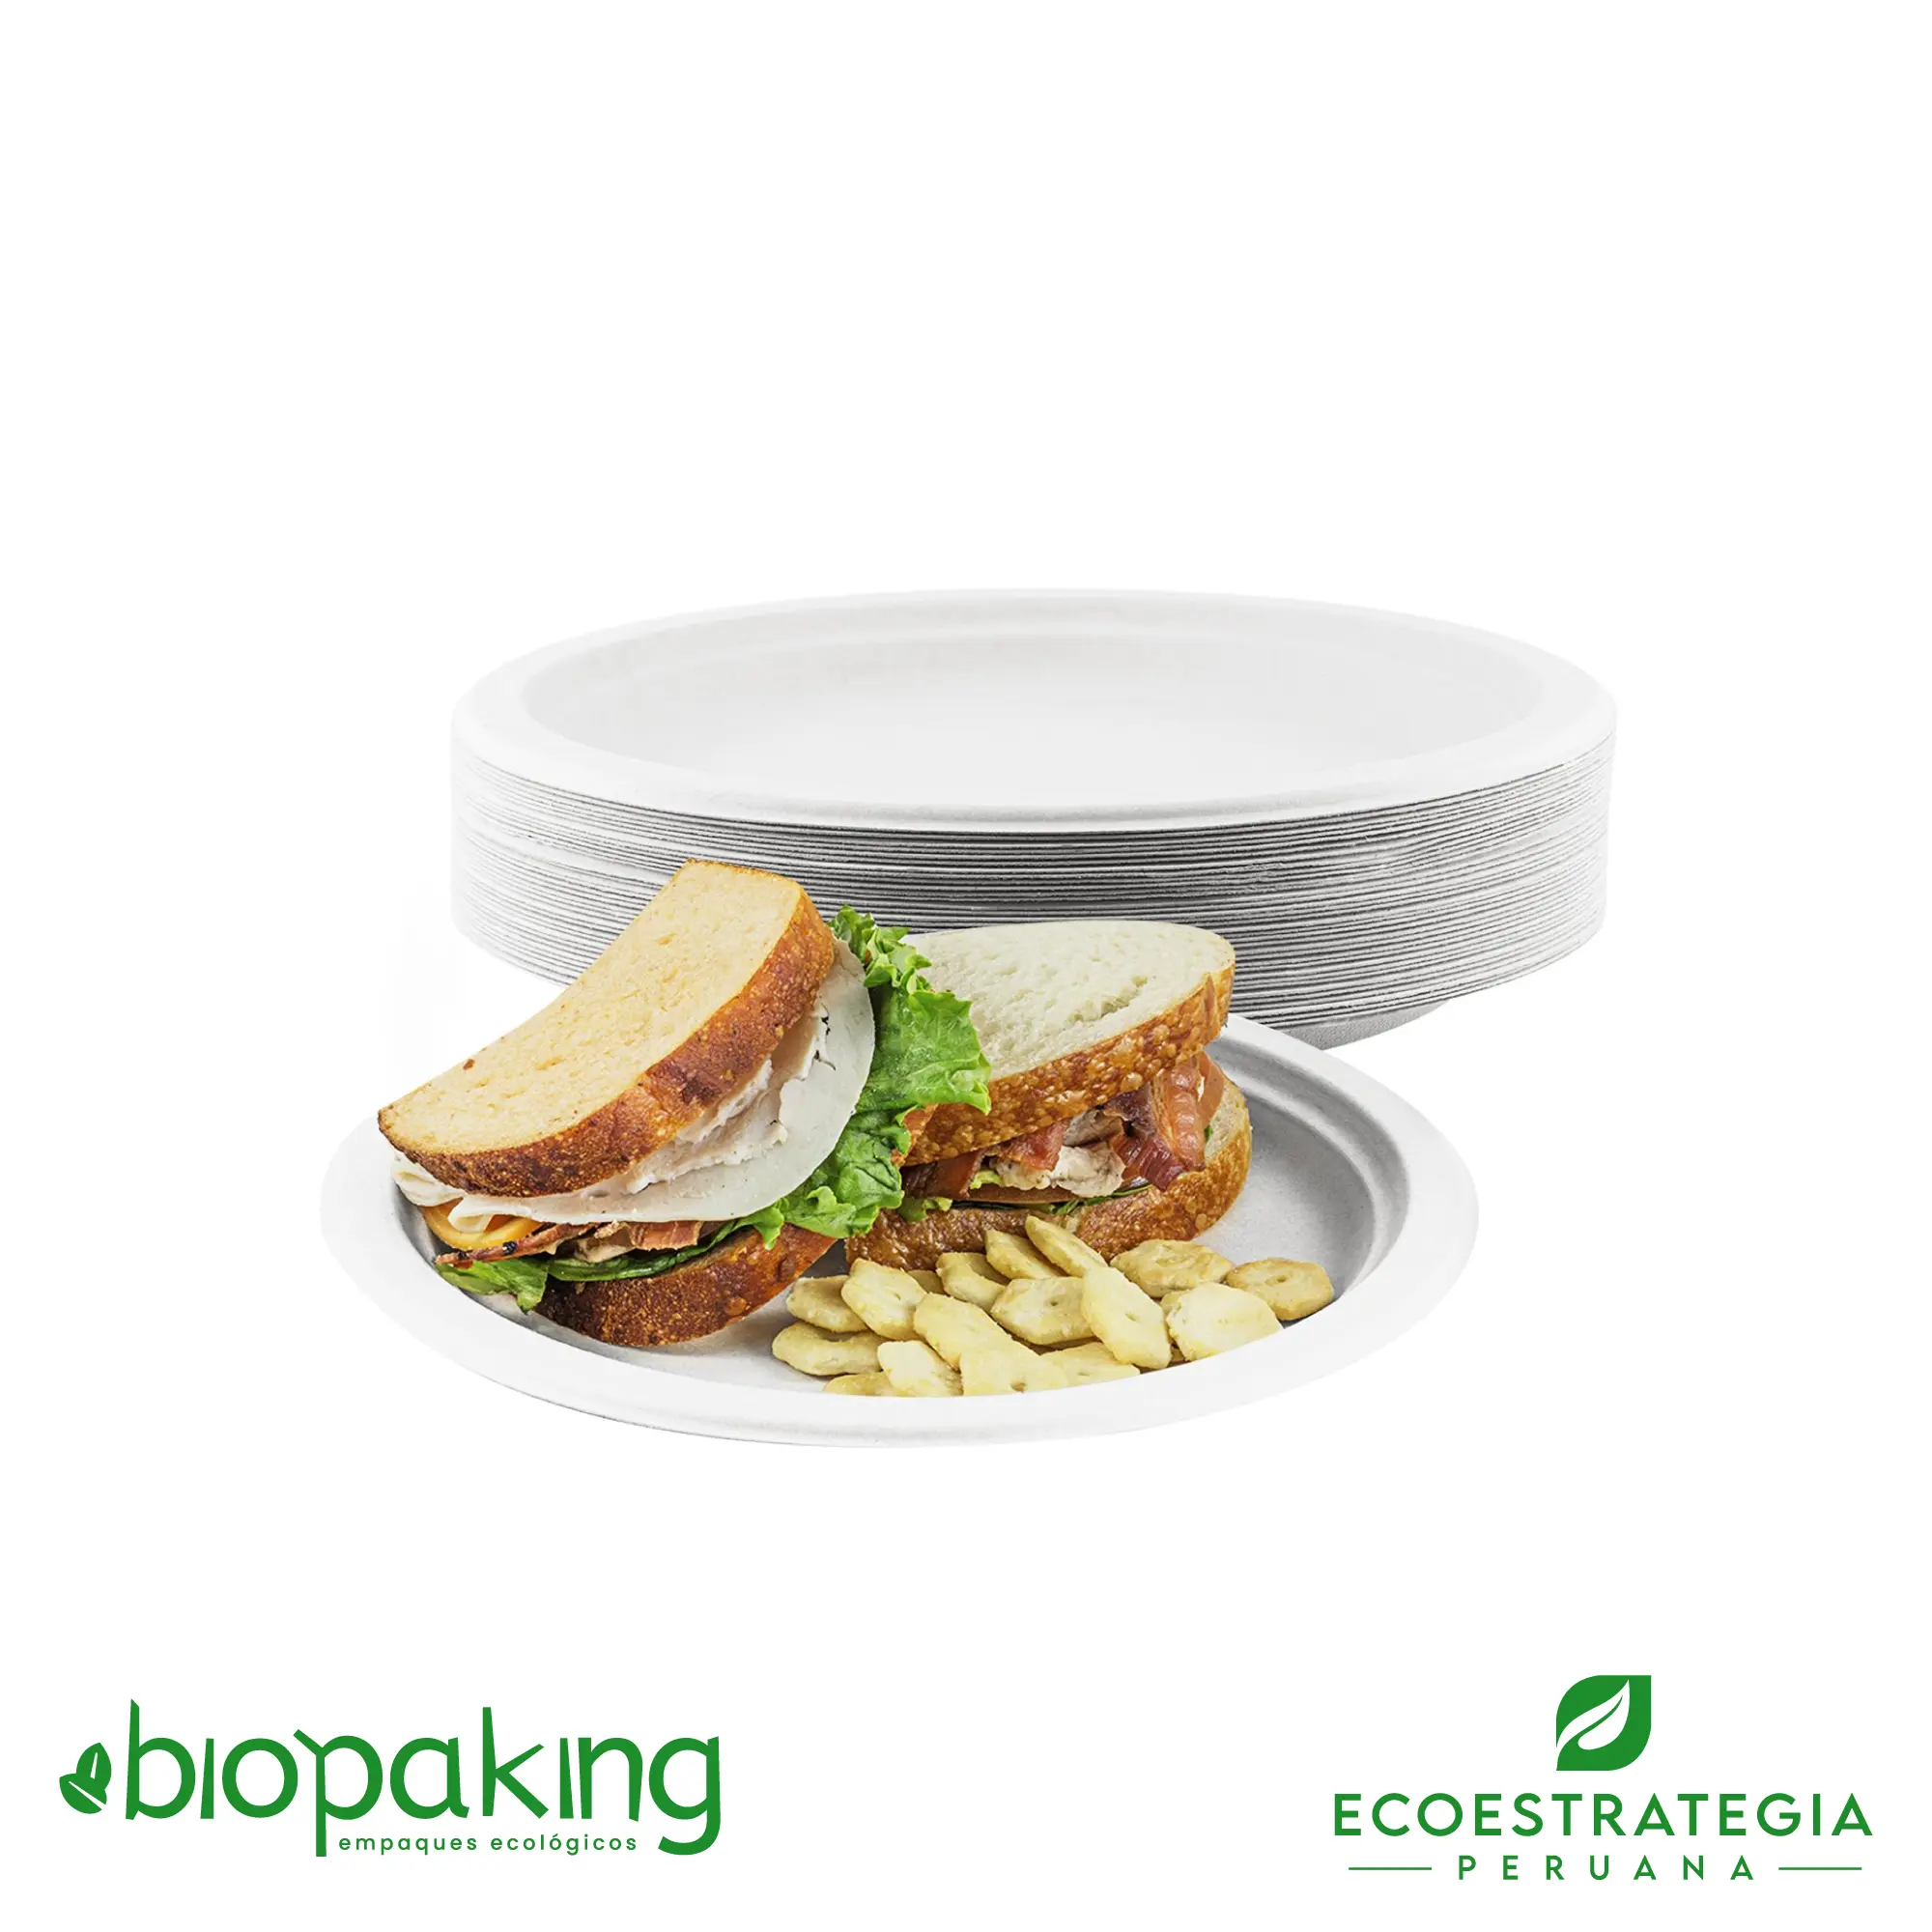 Este plato biodegradable tiene una medida de 15cm. Envase biodegradable a base del bagazo de fibra de caña de azúcar, empaques de gramaje ideal para comidas